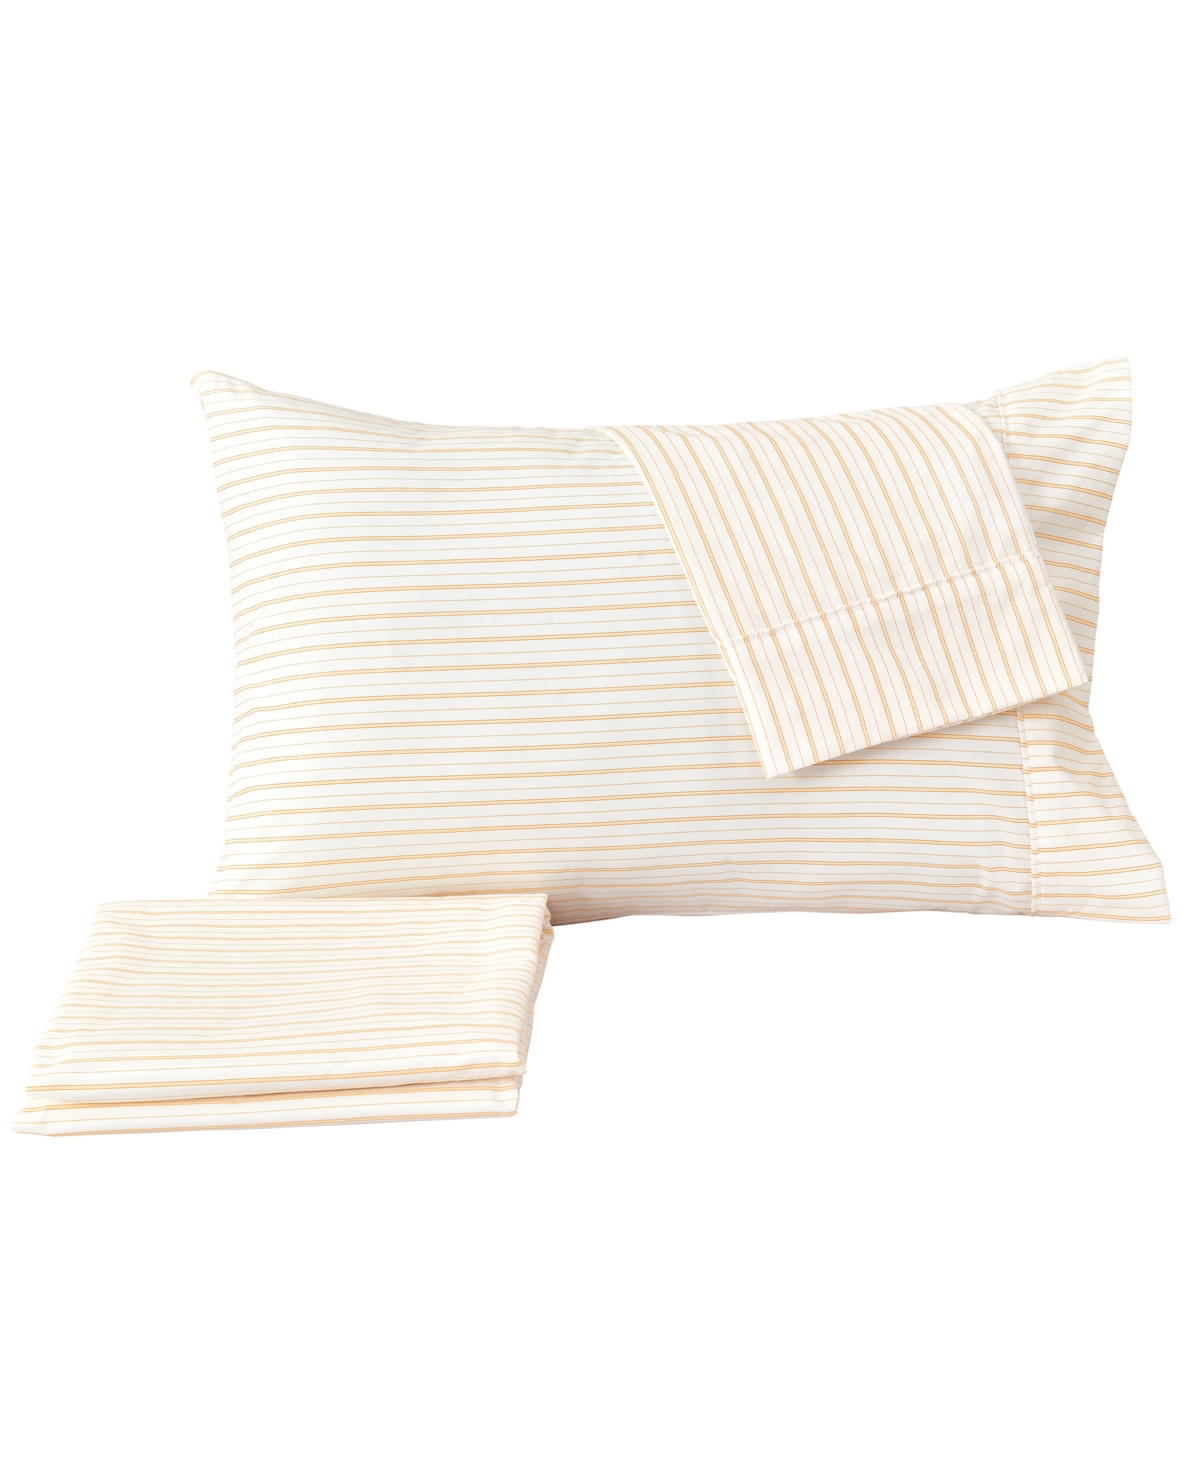 Premium Comforts Striped Microfiber Crease Resistant 3 Piece Sheet Set, Twin In Marigold